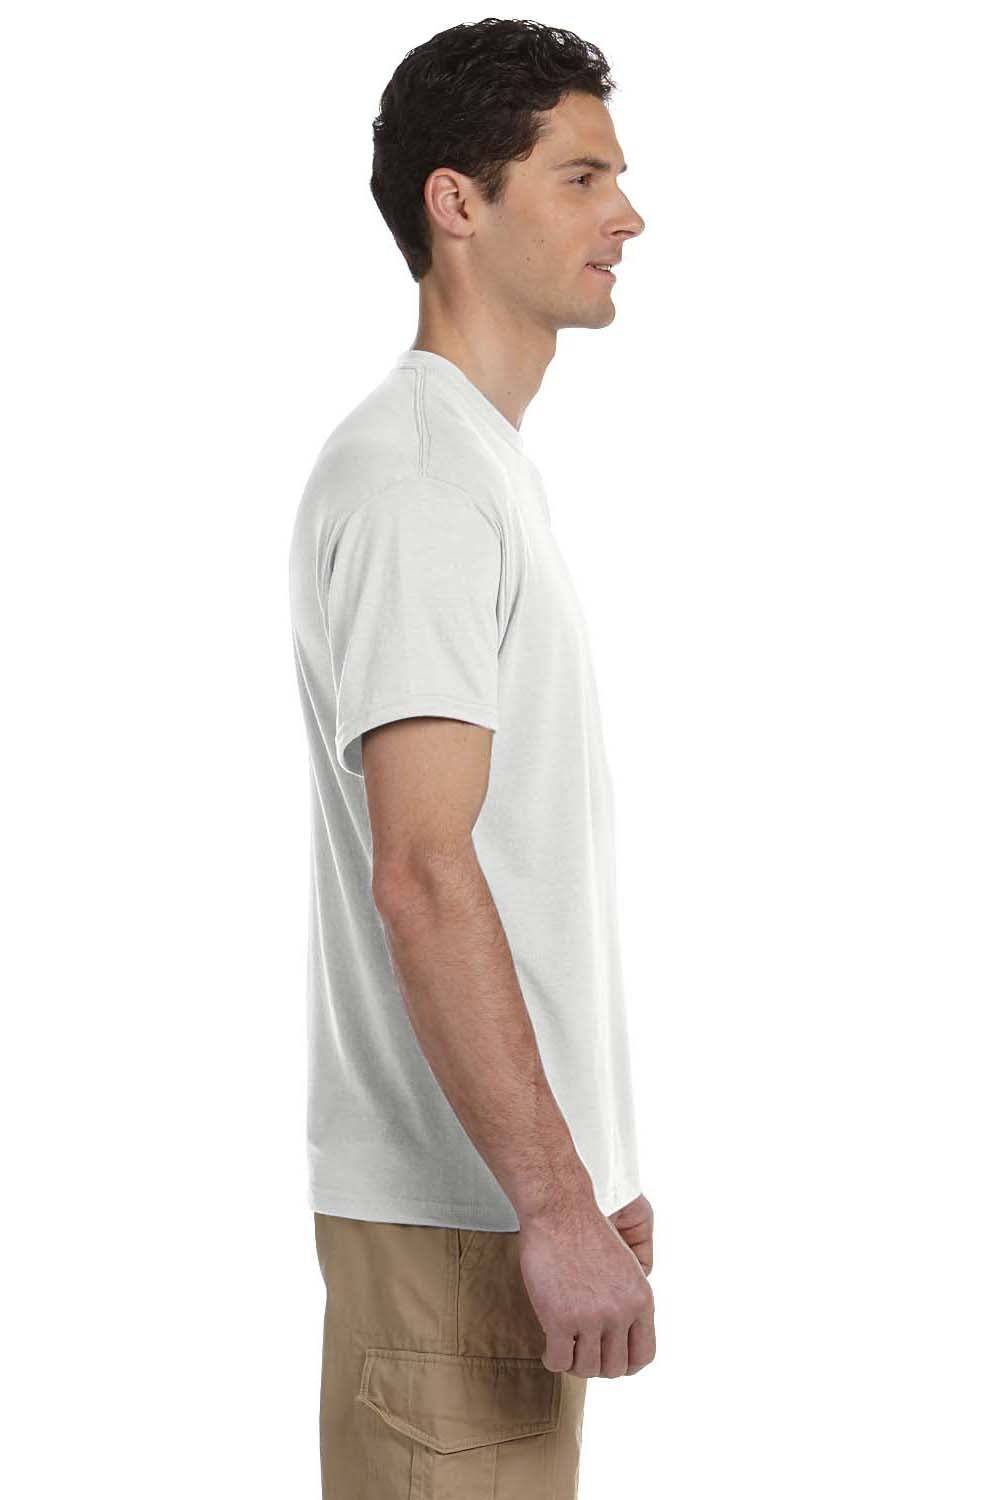 Jerzees 21M Mens Dri-Power Moisture Wicking Short Sleeve Crewneck T-Shirt White Side